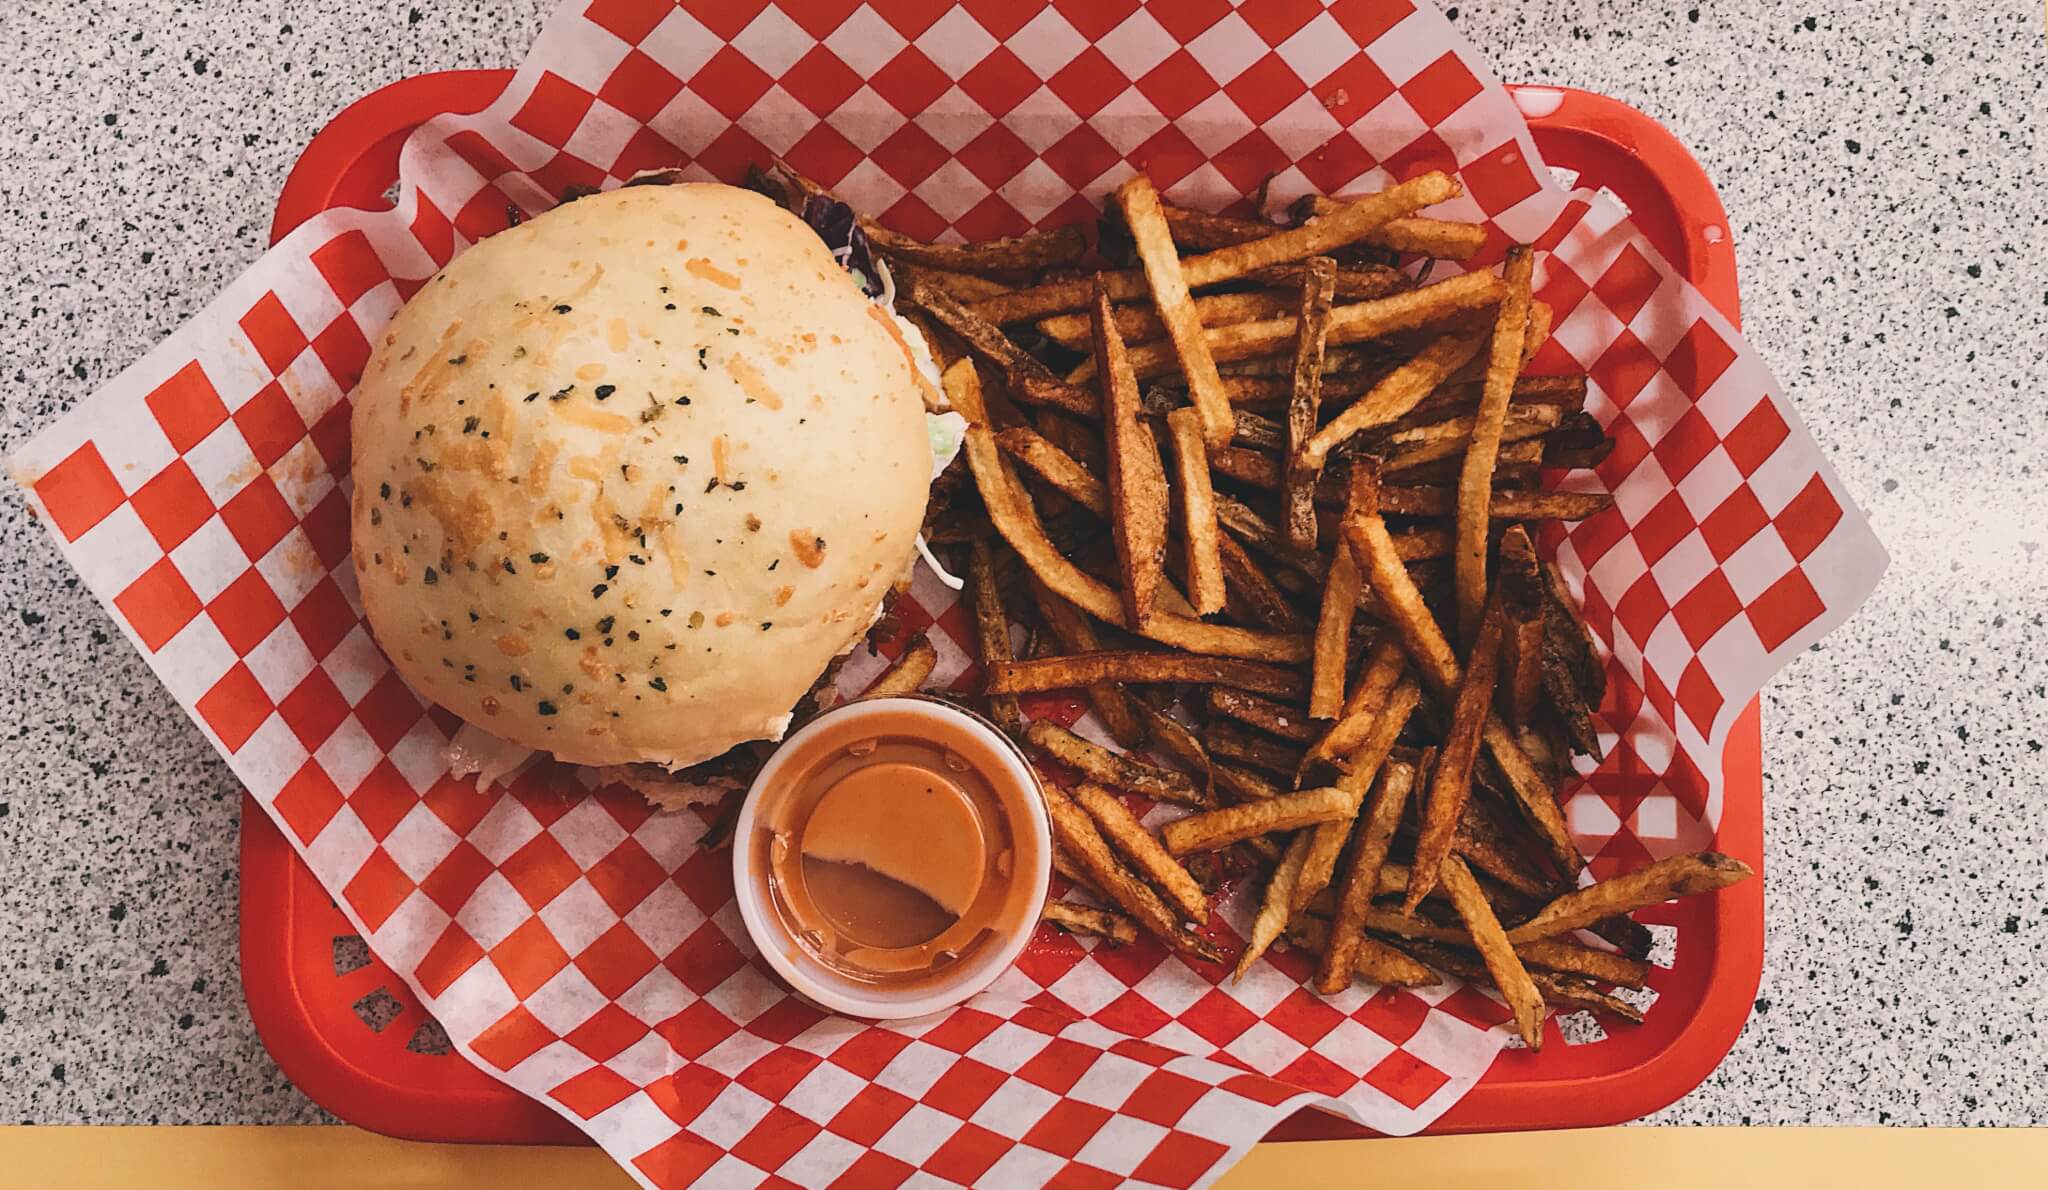 Blister's has some of the best restaurant fries in Rexburg.